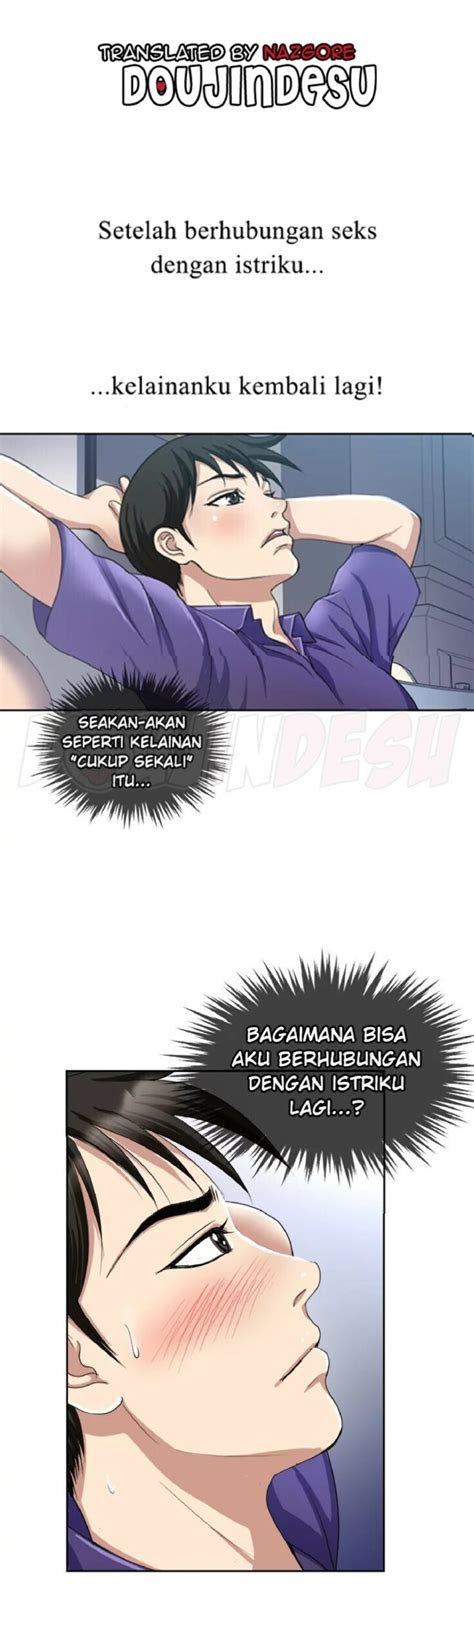 Read the latest manga Ibu Dan Anak Sama Sama Enak Chapter 01 at Komik Dewasa. . Komik dewasa